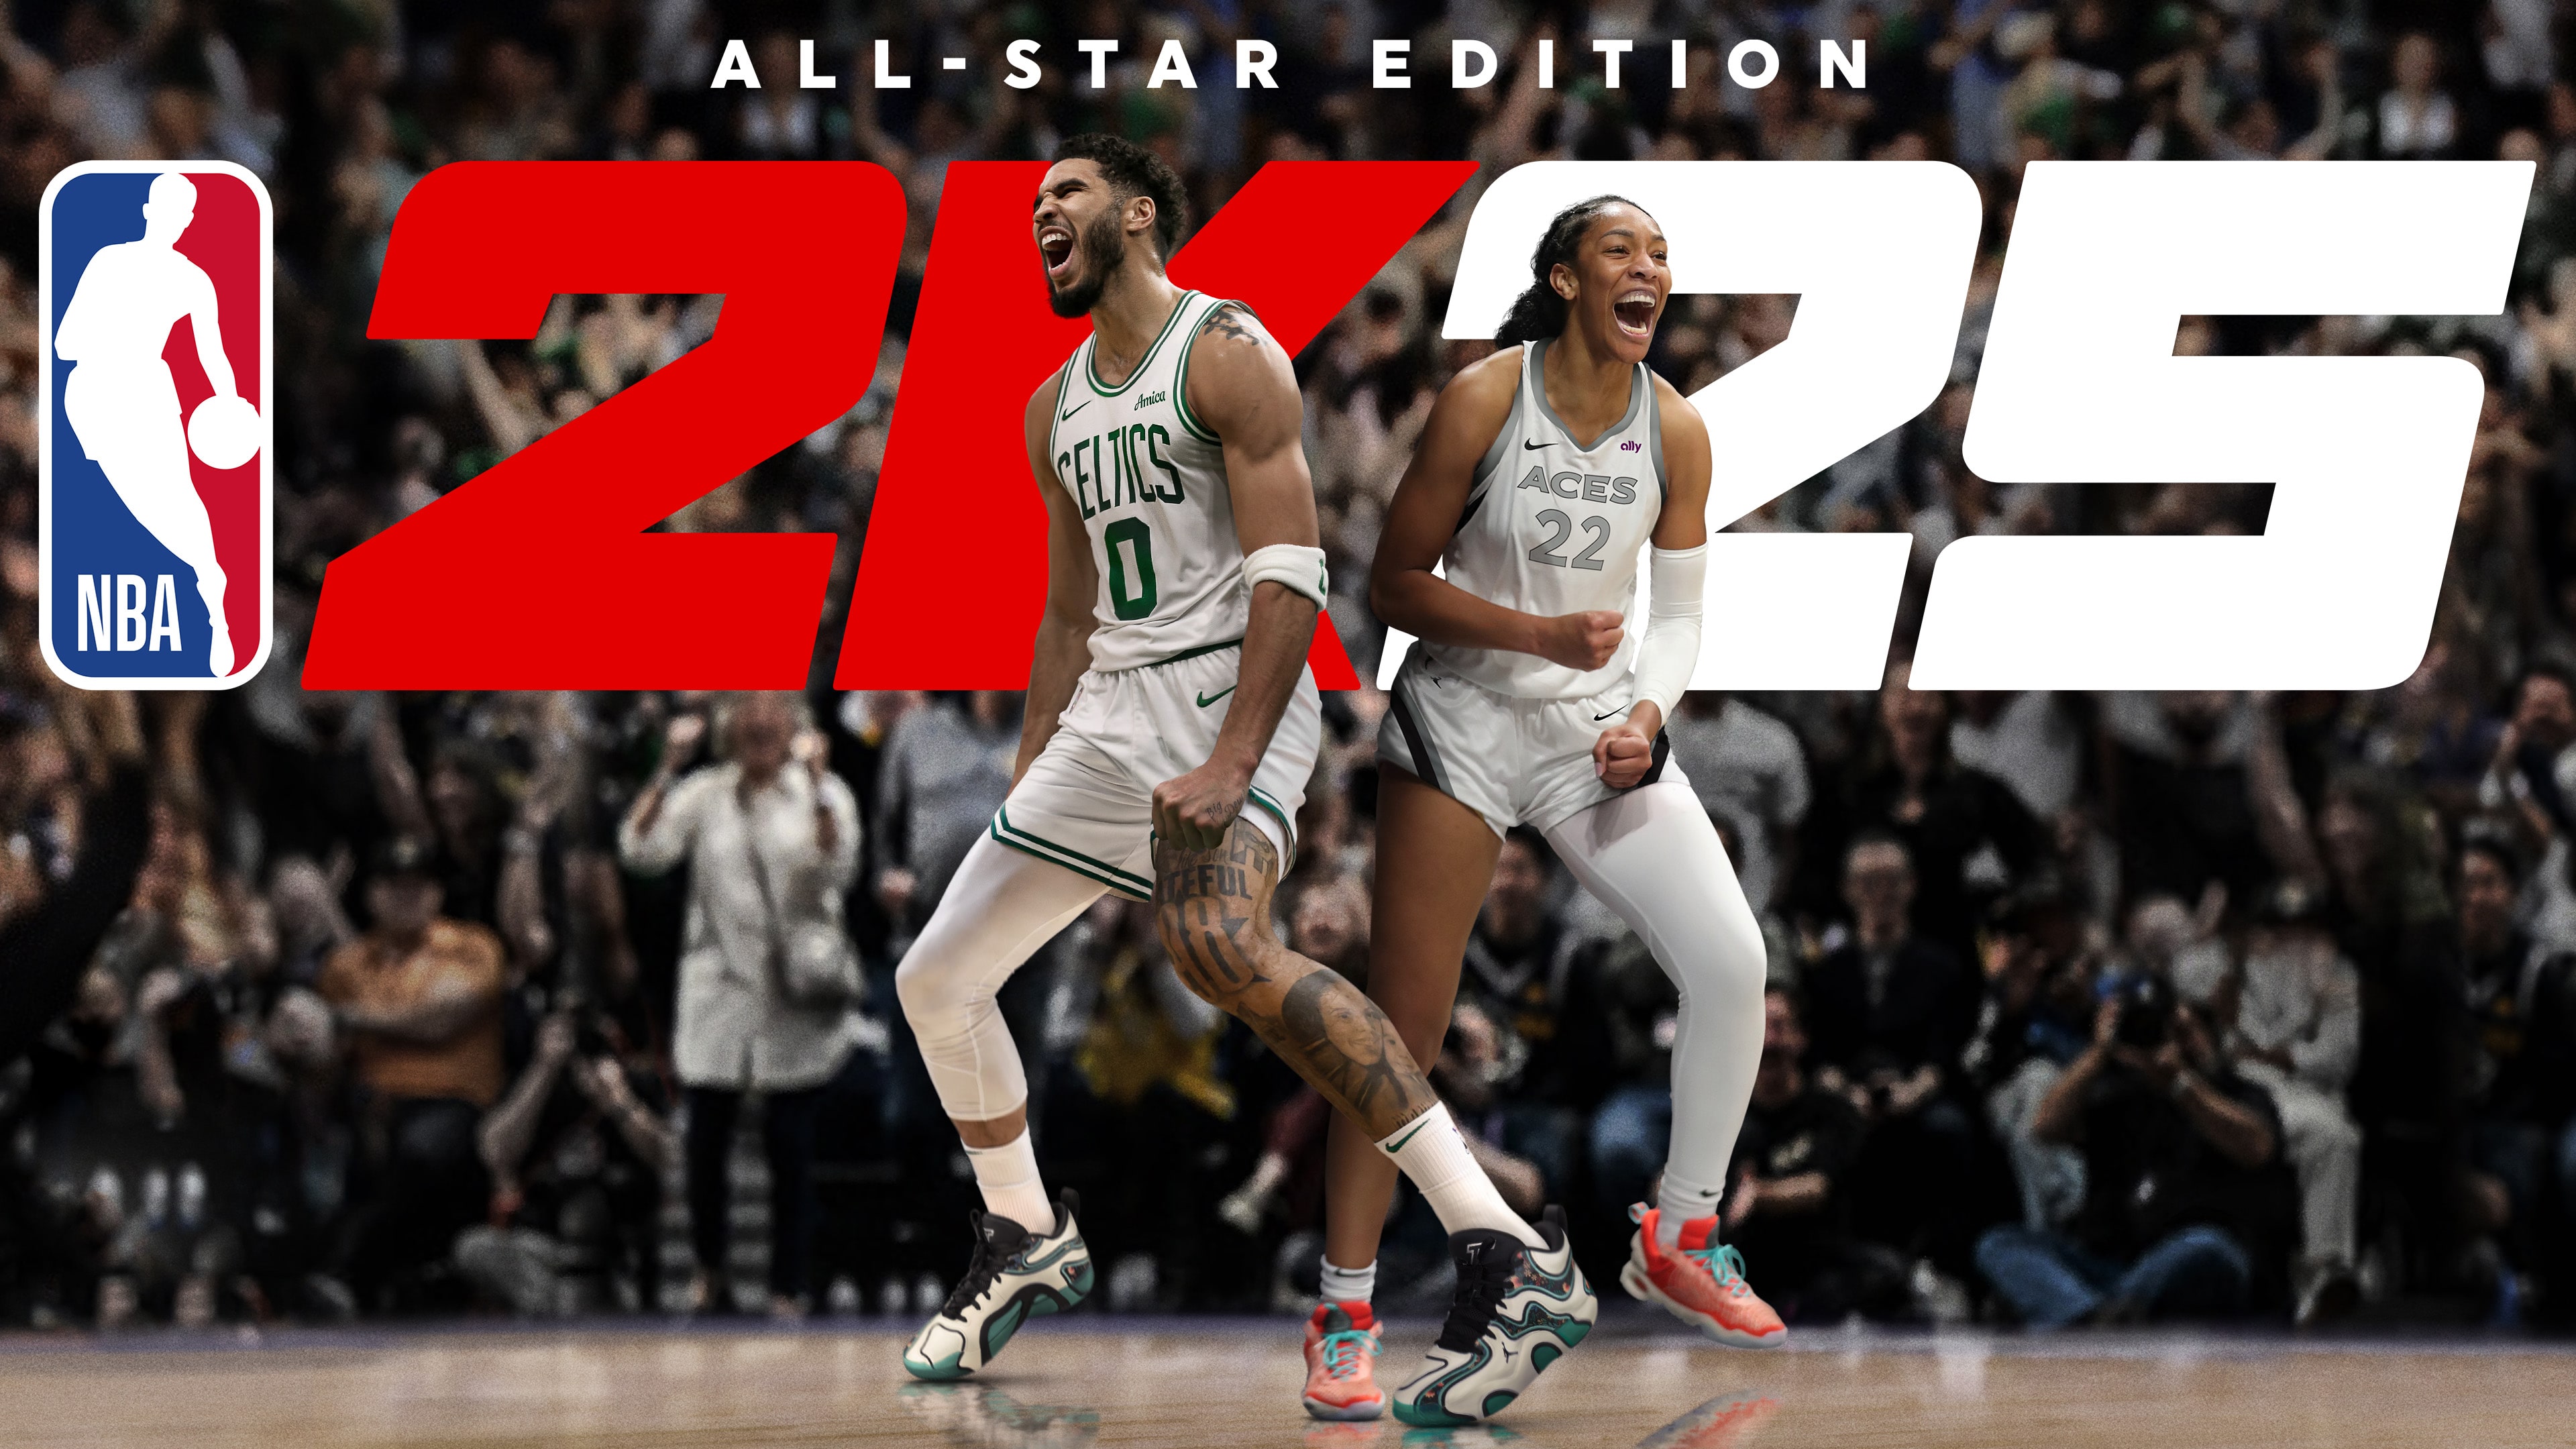 All-Star Edition